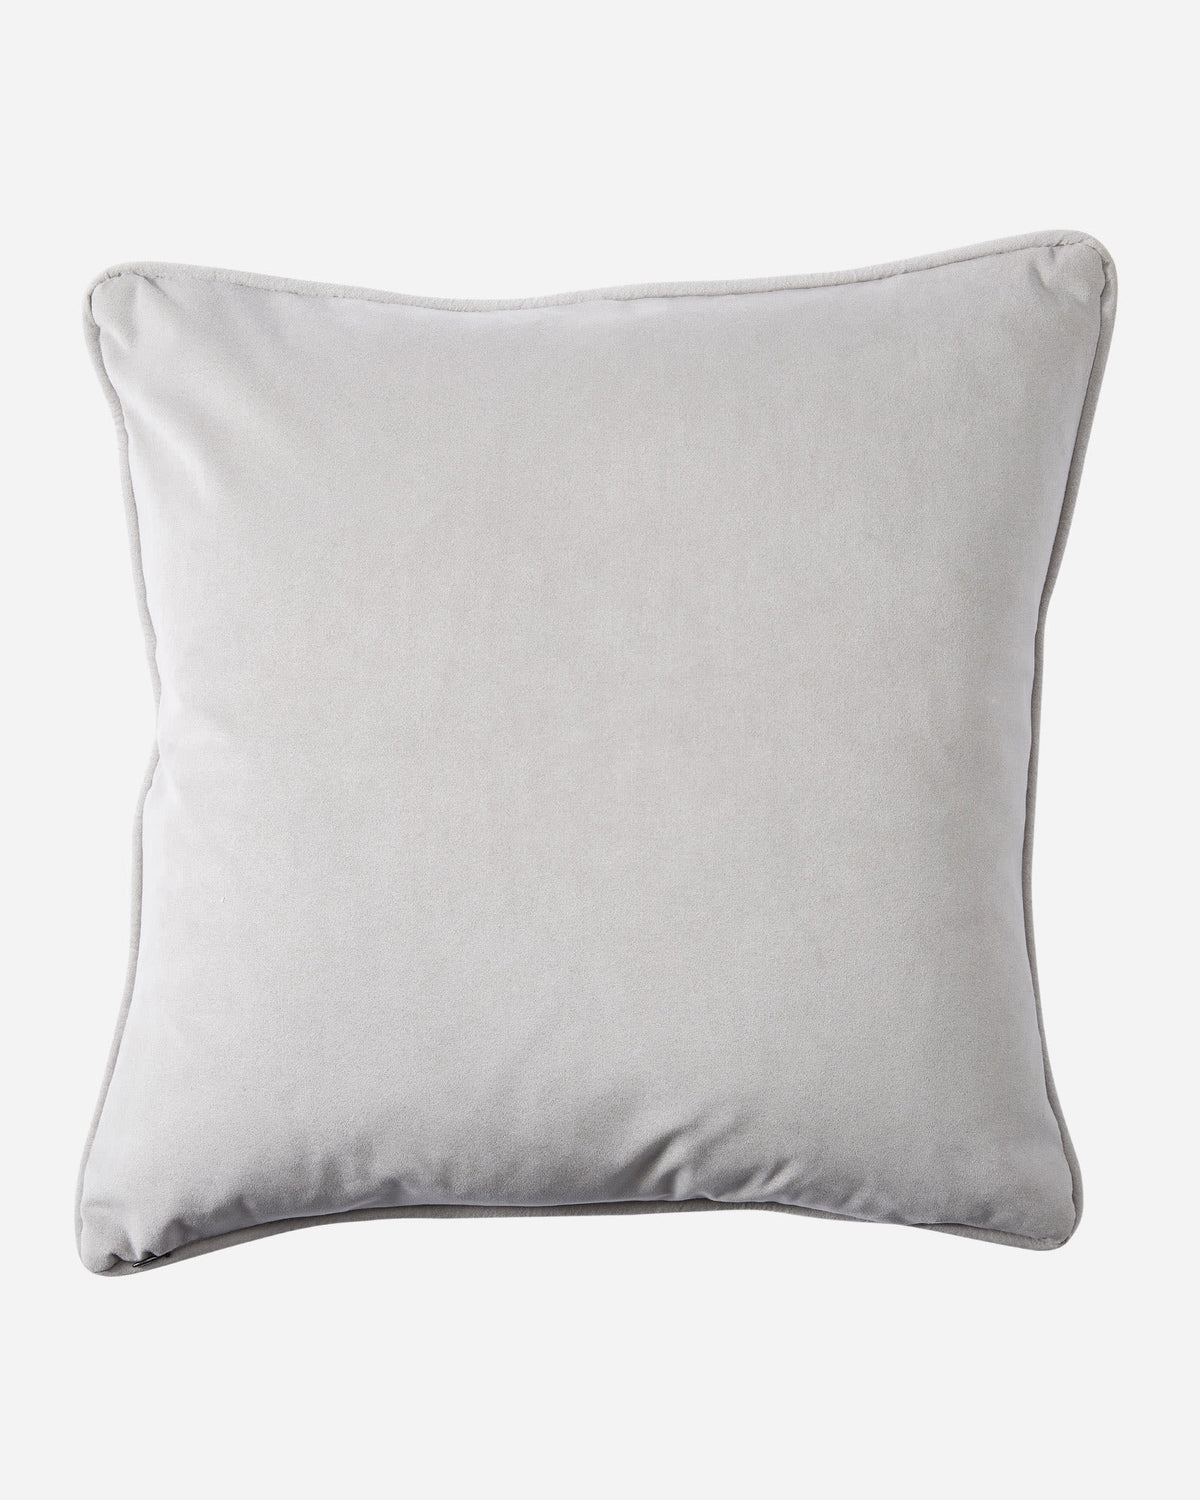 Bison Rush Hour Pendleton Throw Pillow Reverse made in Oregon, USA - Blue Mountain Brands USA Home Decor